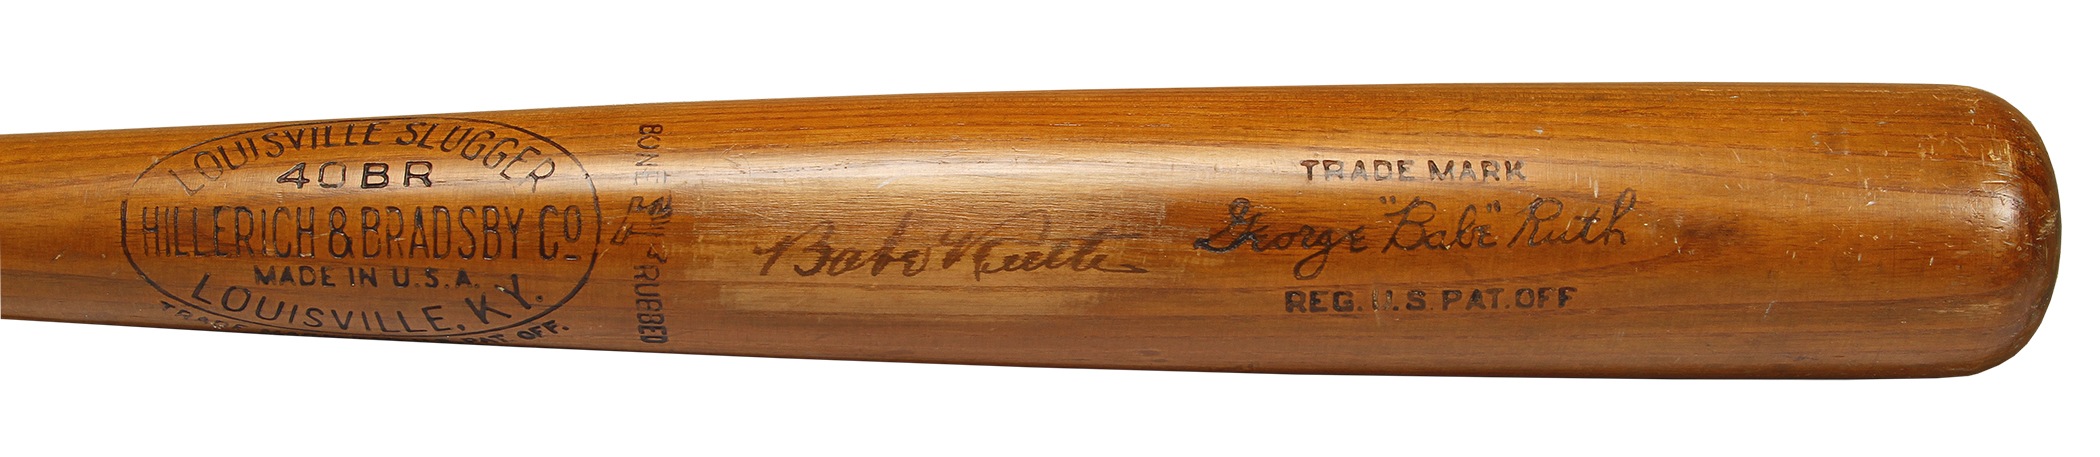 Babe Ruth Baseball Bat With Signature